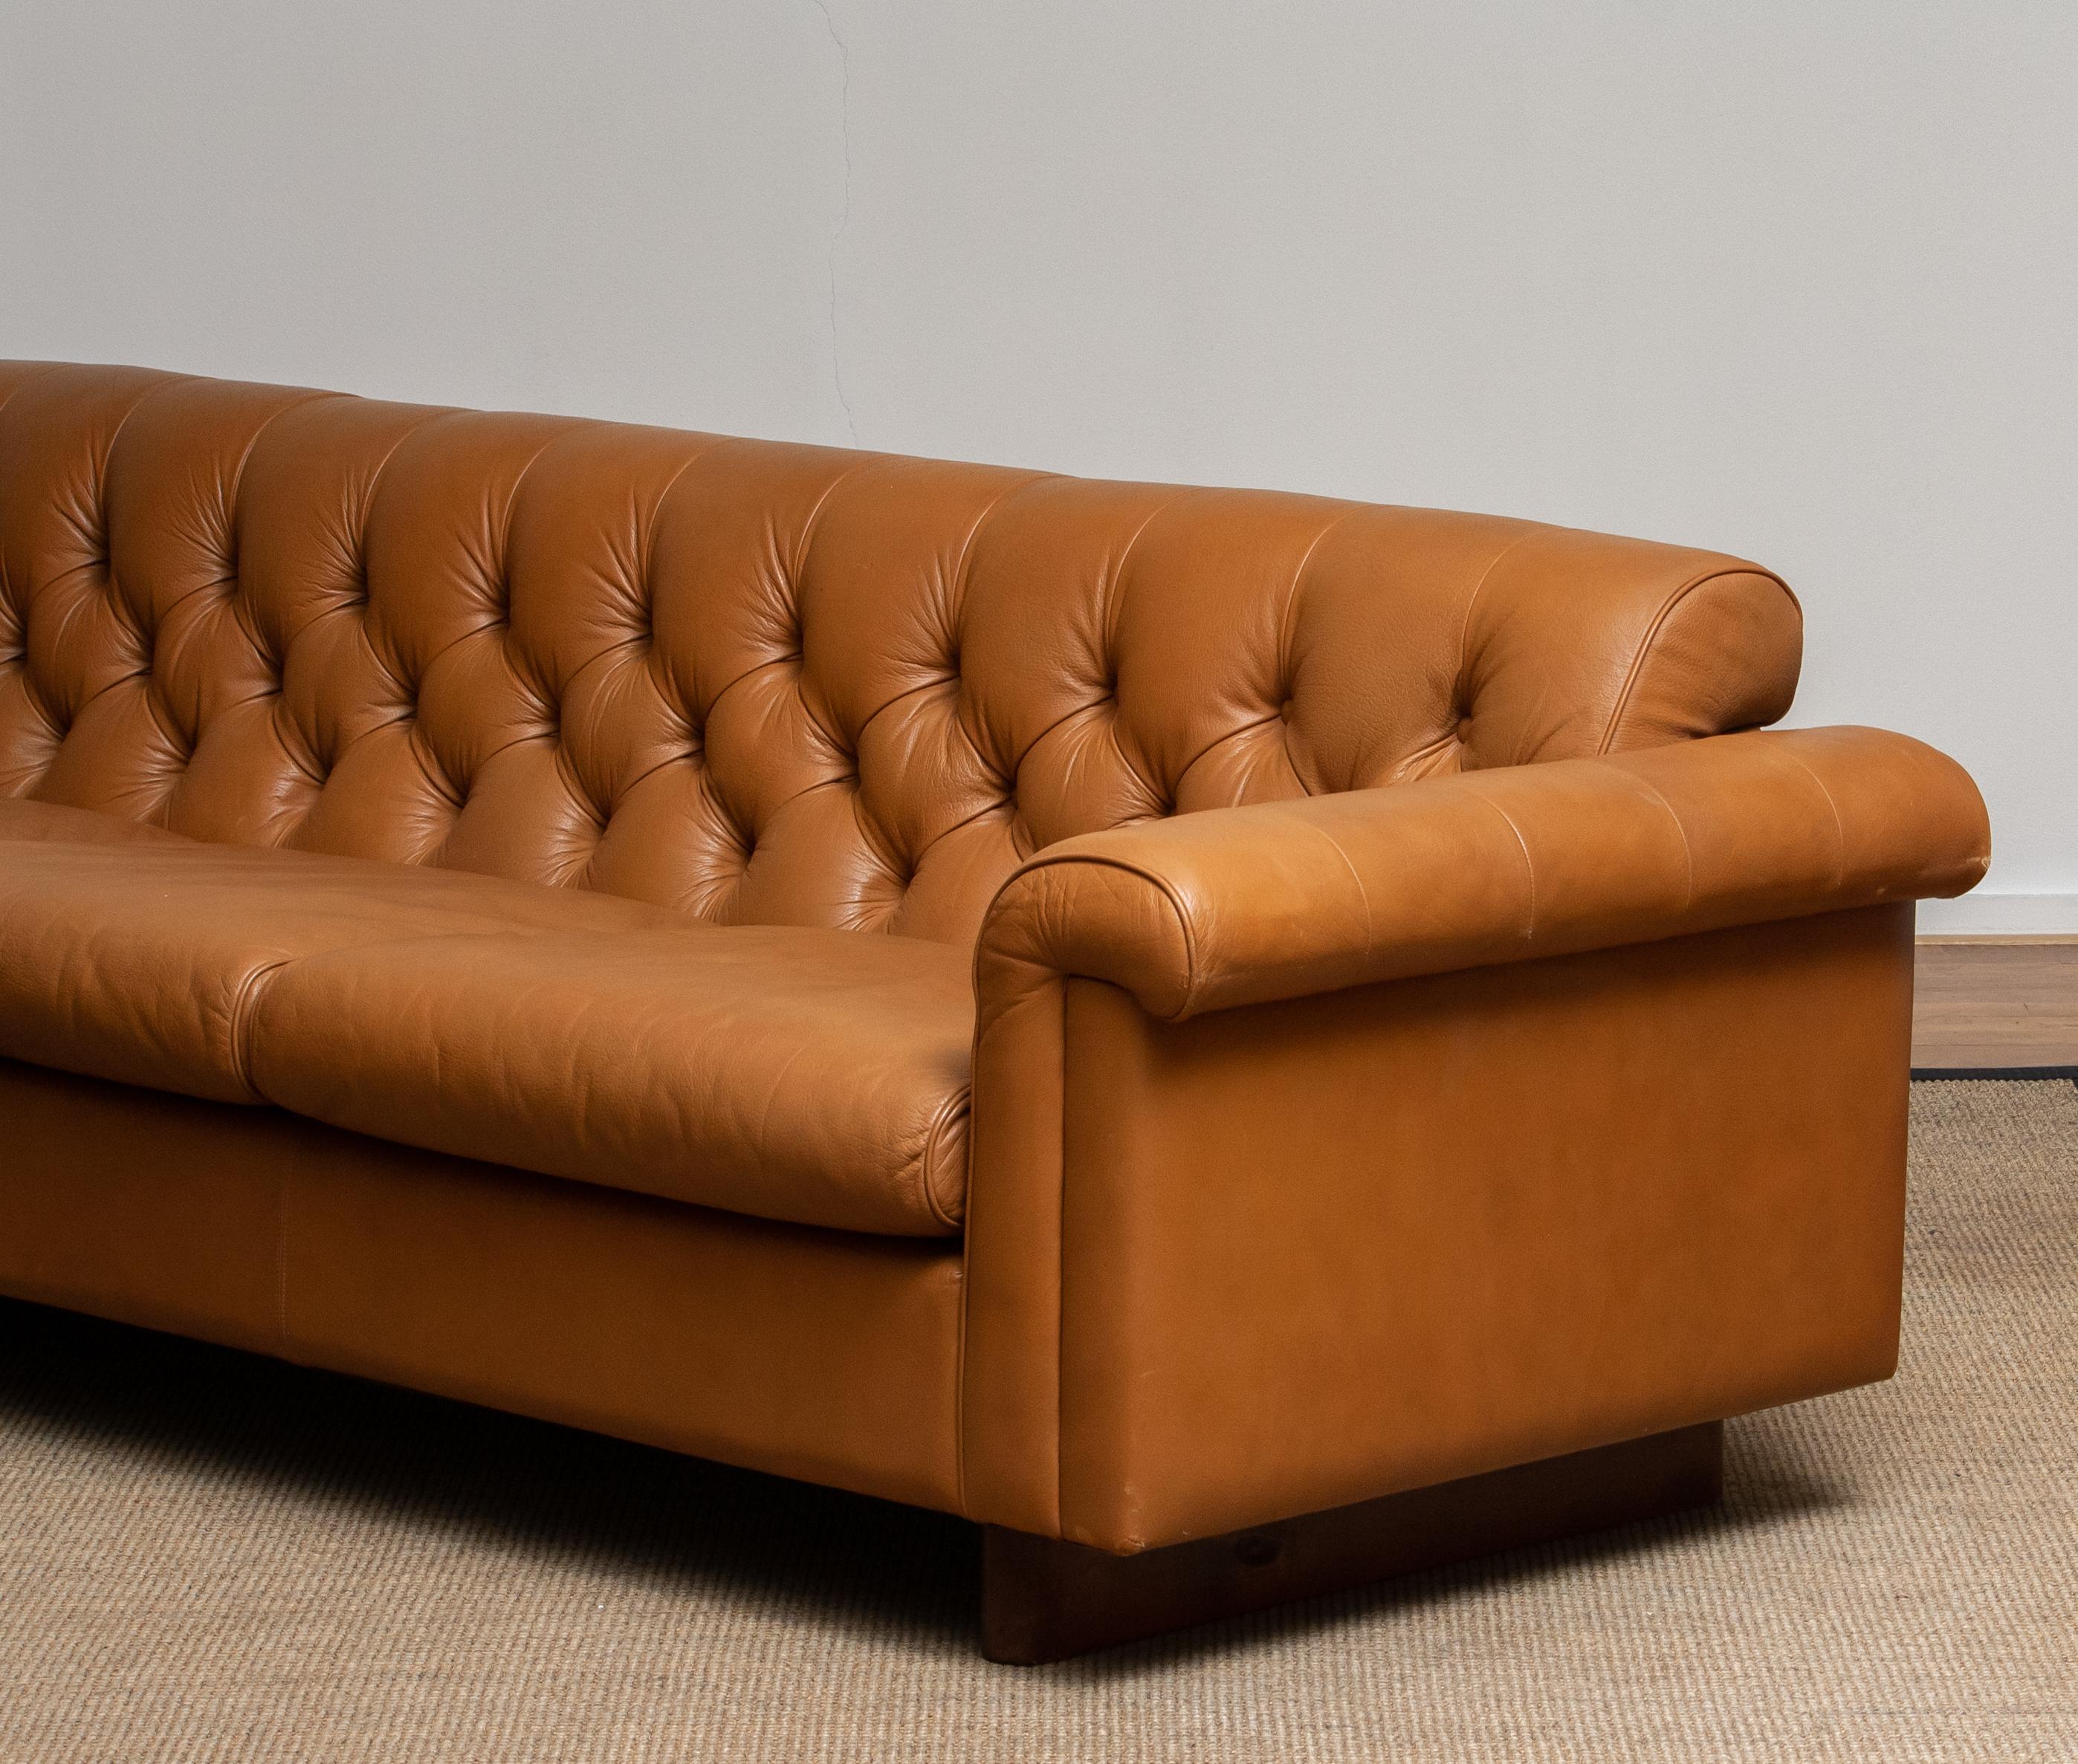 Scandinavian Modern 1970's Sofa by Karl Erik Ekselius for JOC Design in Camel Color Tufted Leather